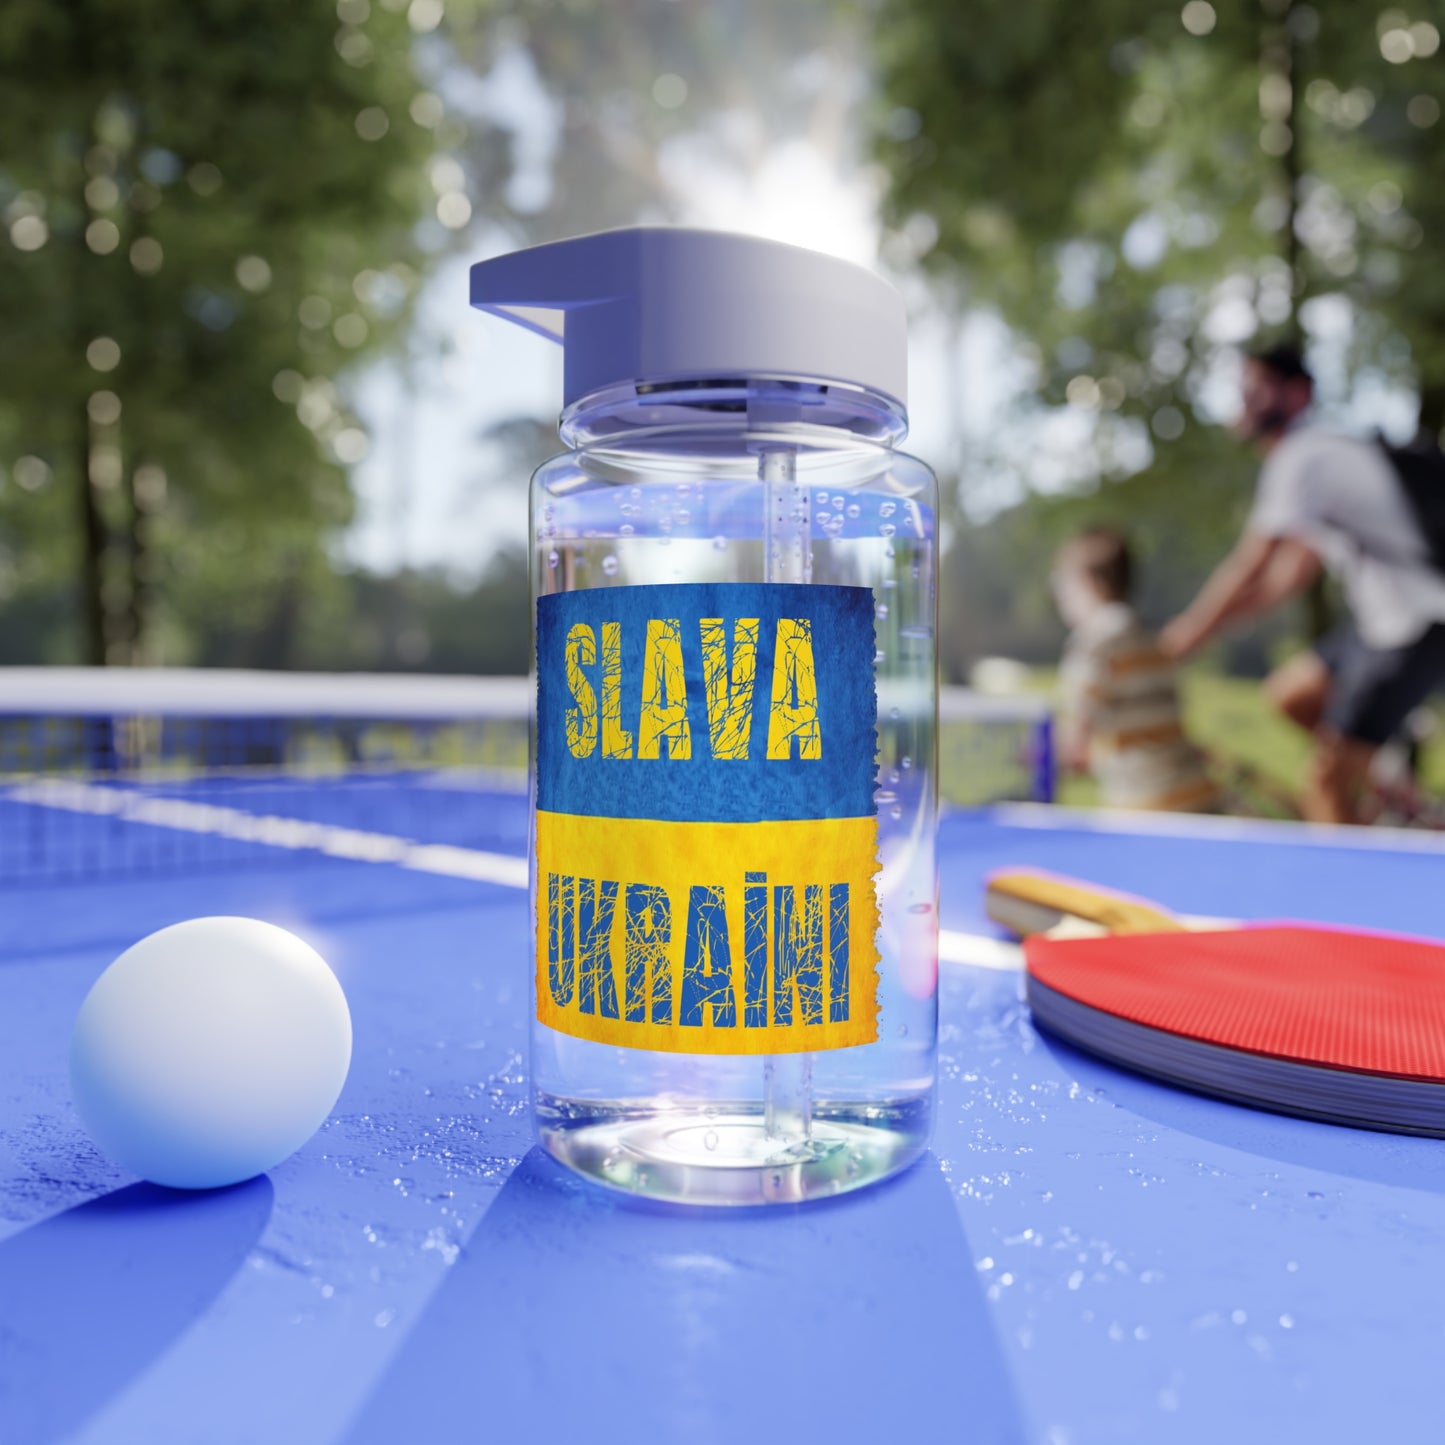 "SLAVE UKRAĪNI" - BIODEGRADABLE Tritan Water Bottle